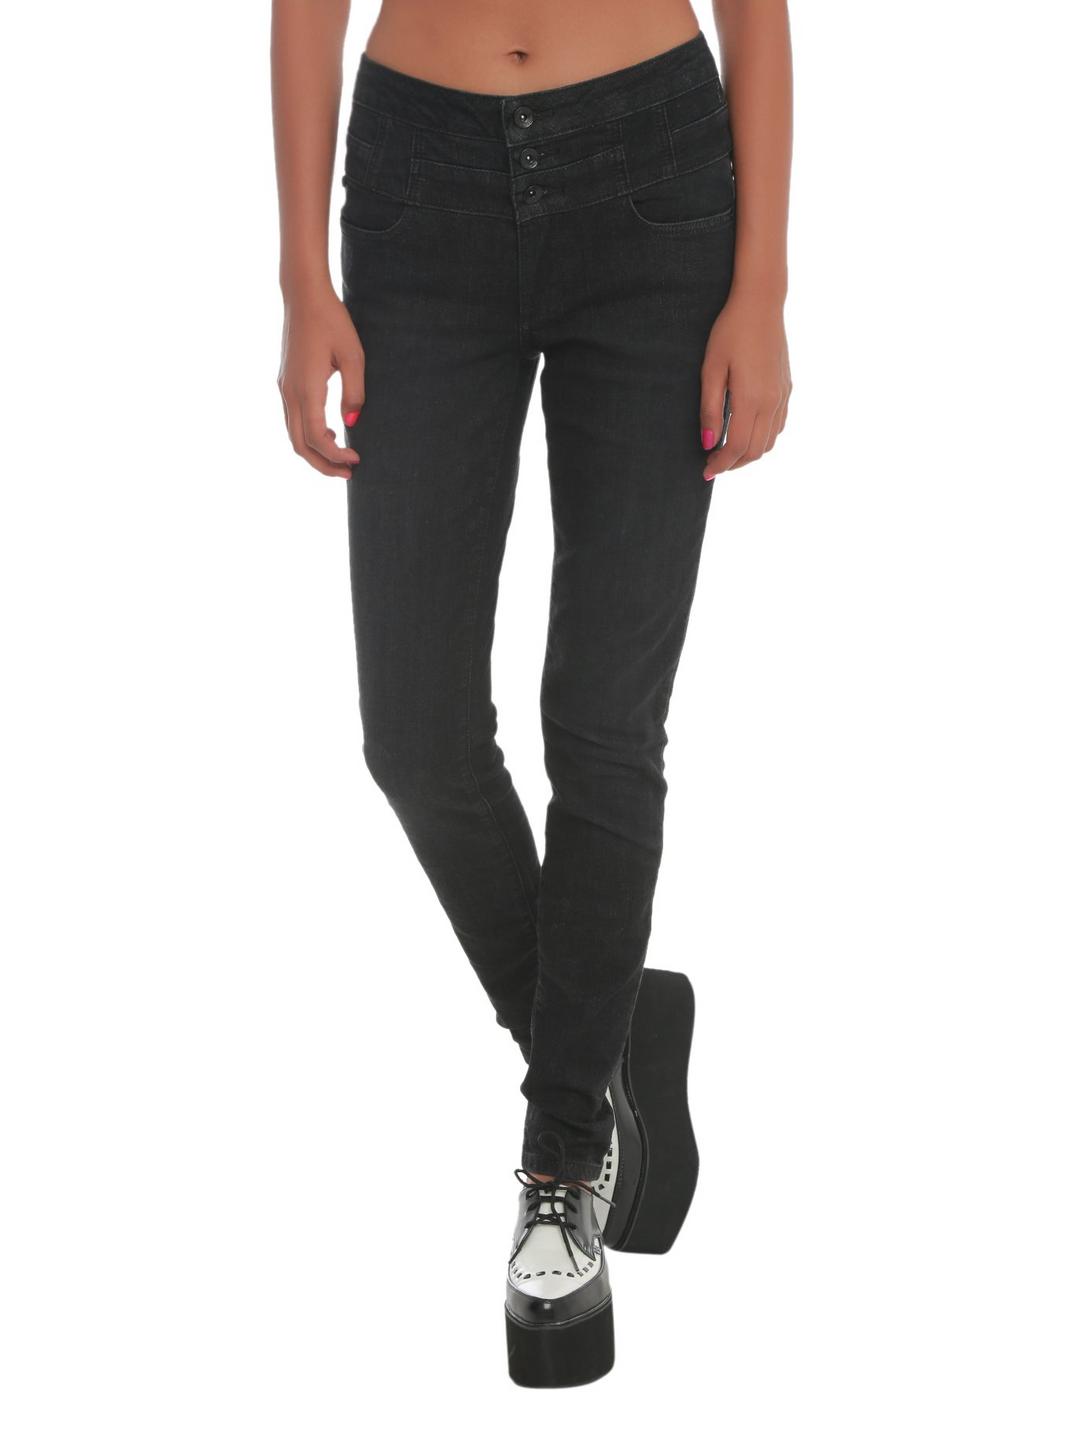 LOVEsick Black High-Waisted Skinny Jeans, BLACK, hi-res